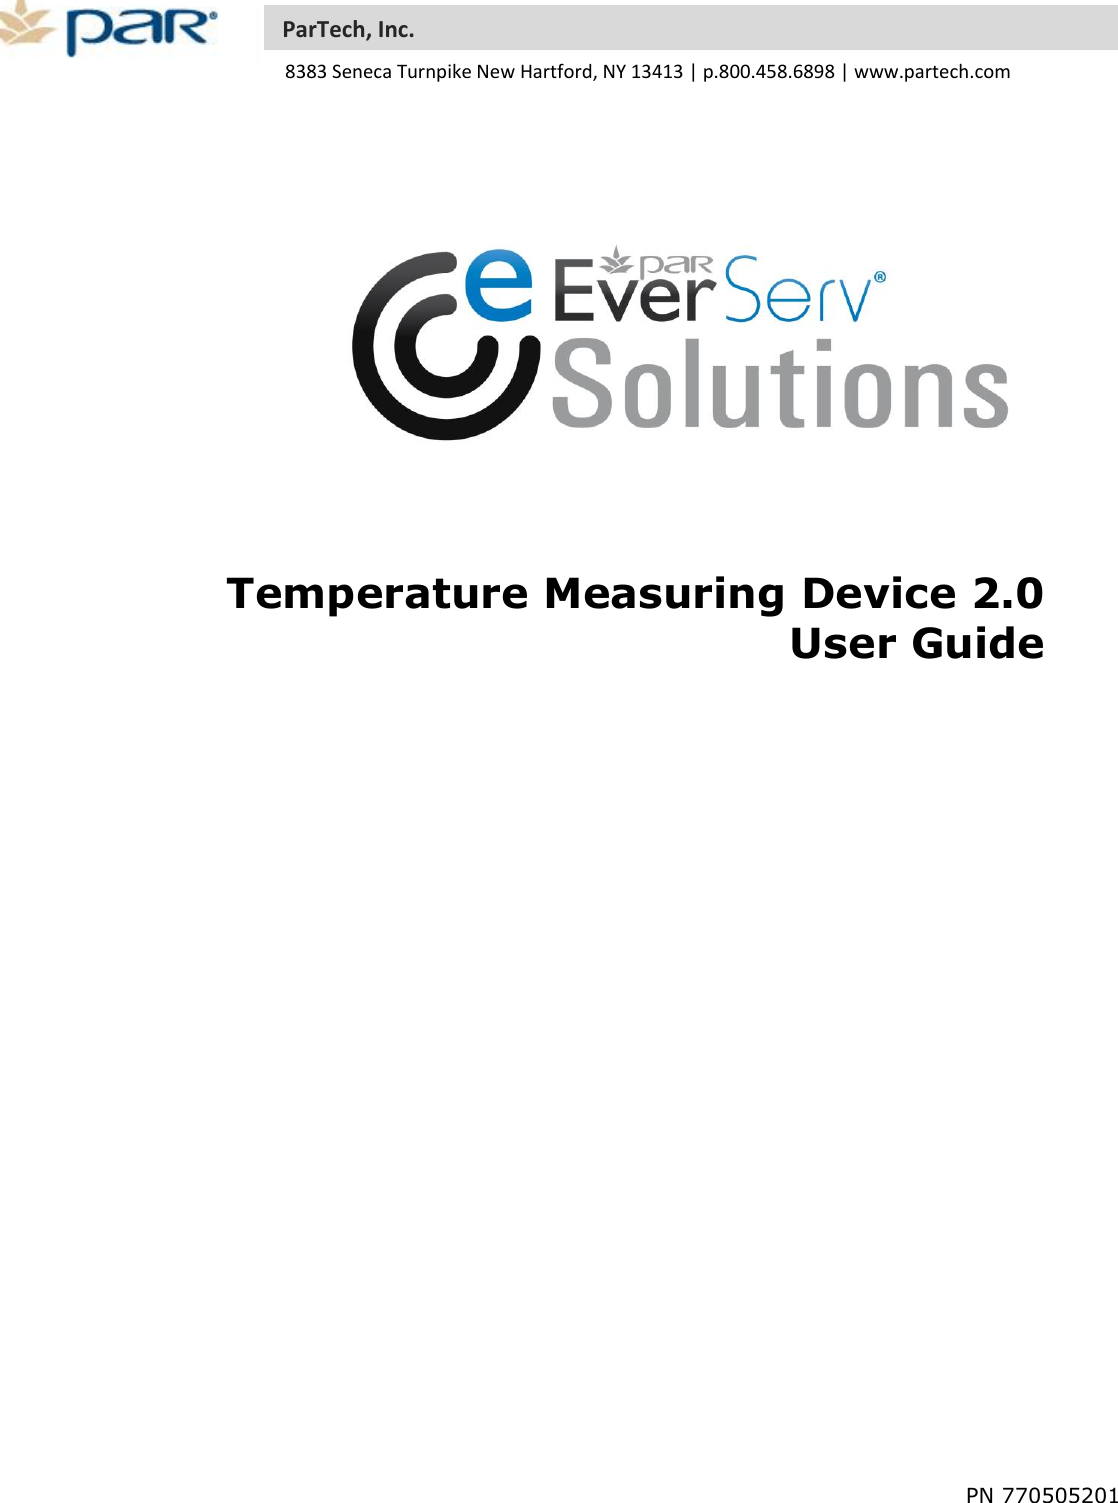     PN 770505201     Temperature Measuring Device 2.0 User Guide        8383 Seneca Turnpike New Hartford, NY 13413 | p.800.458.6898 | www.partech.com ParTech, Inc. 